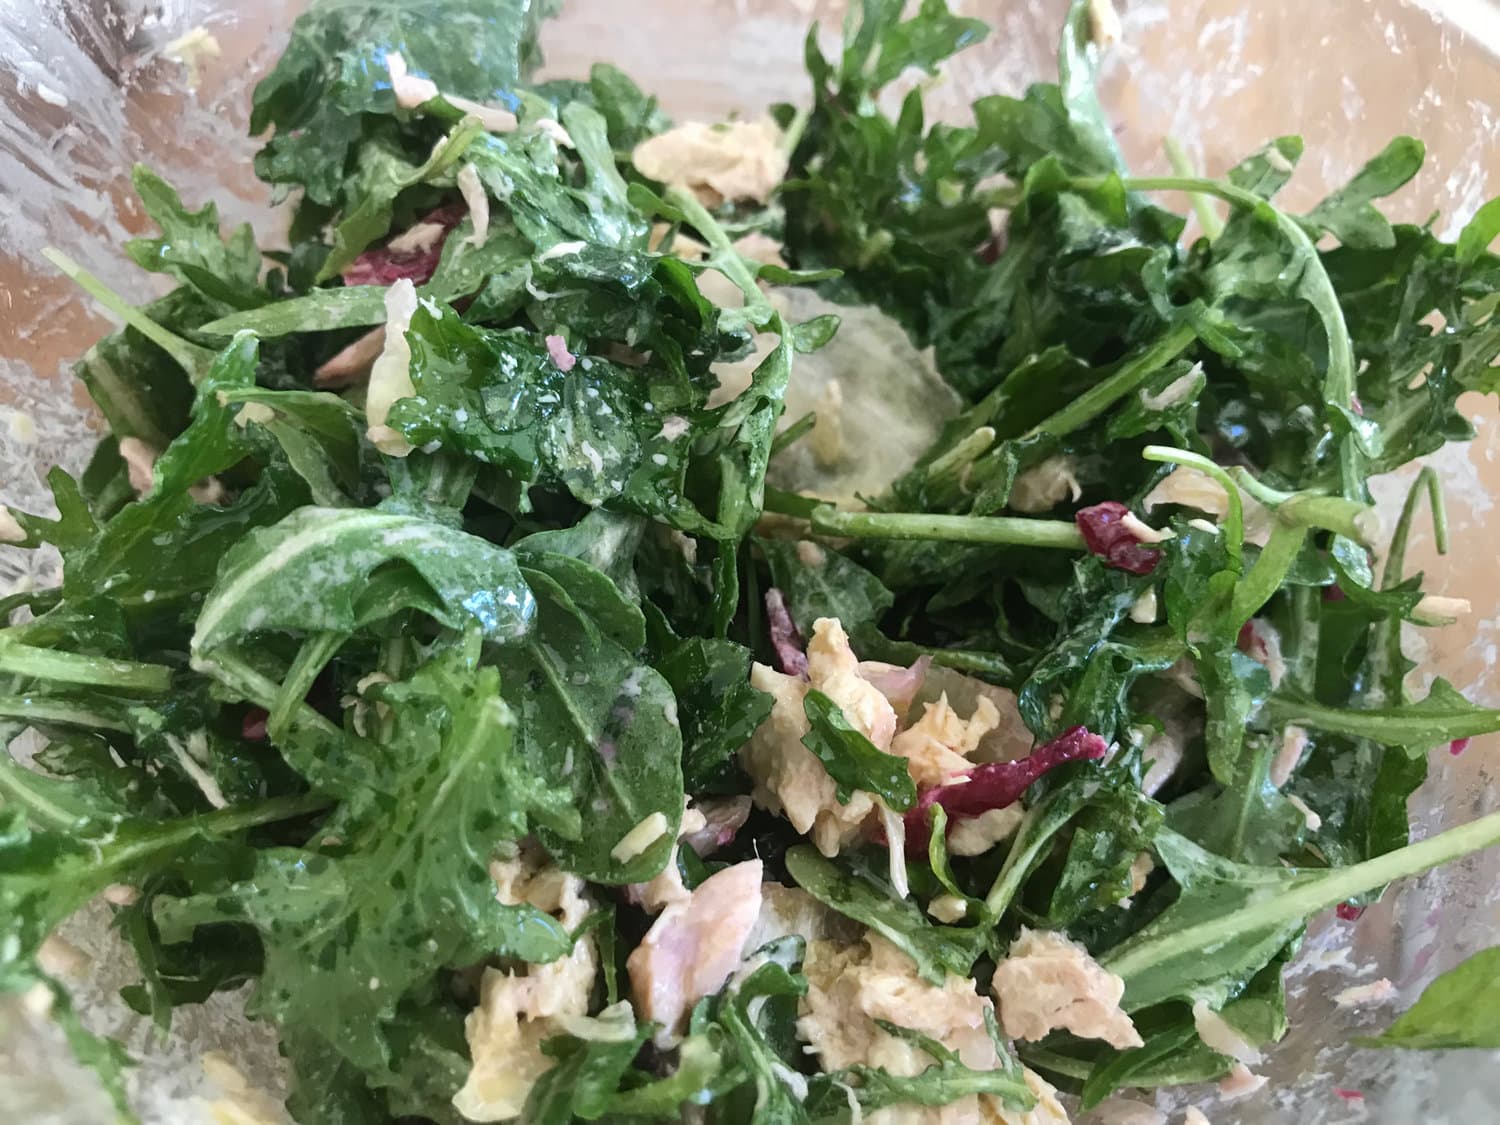 Green goddess salad dressing recipe